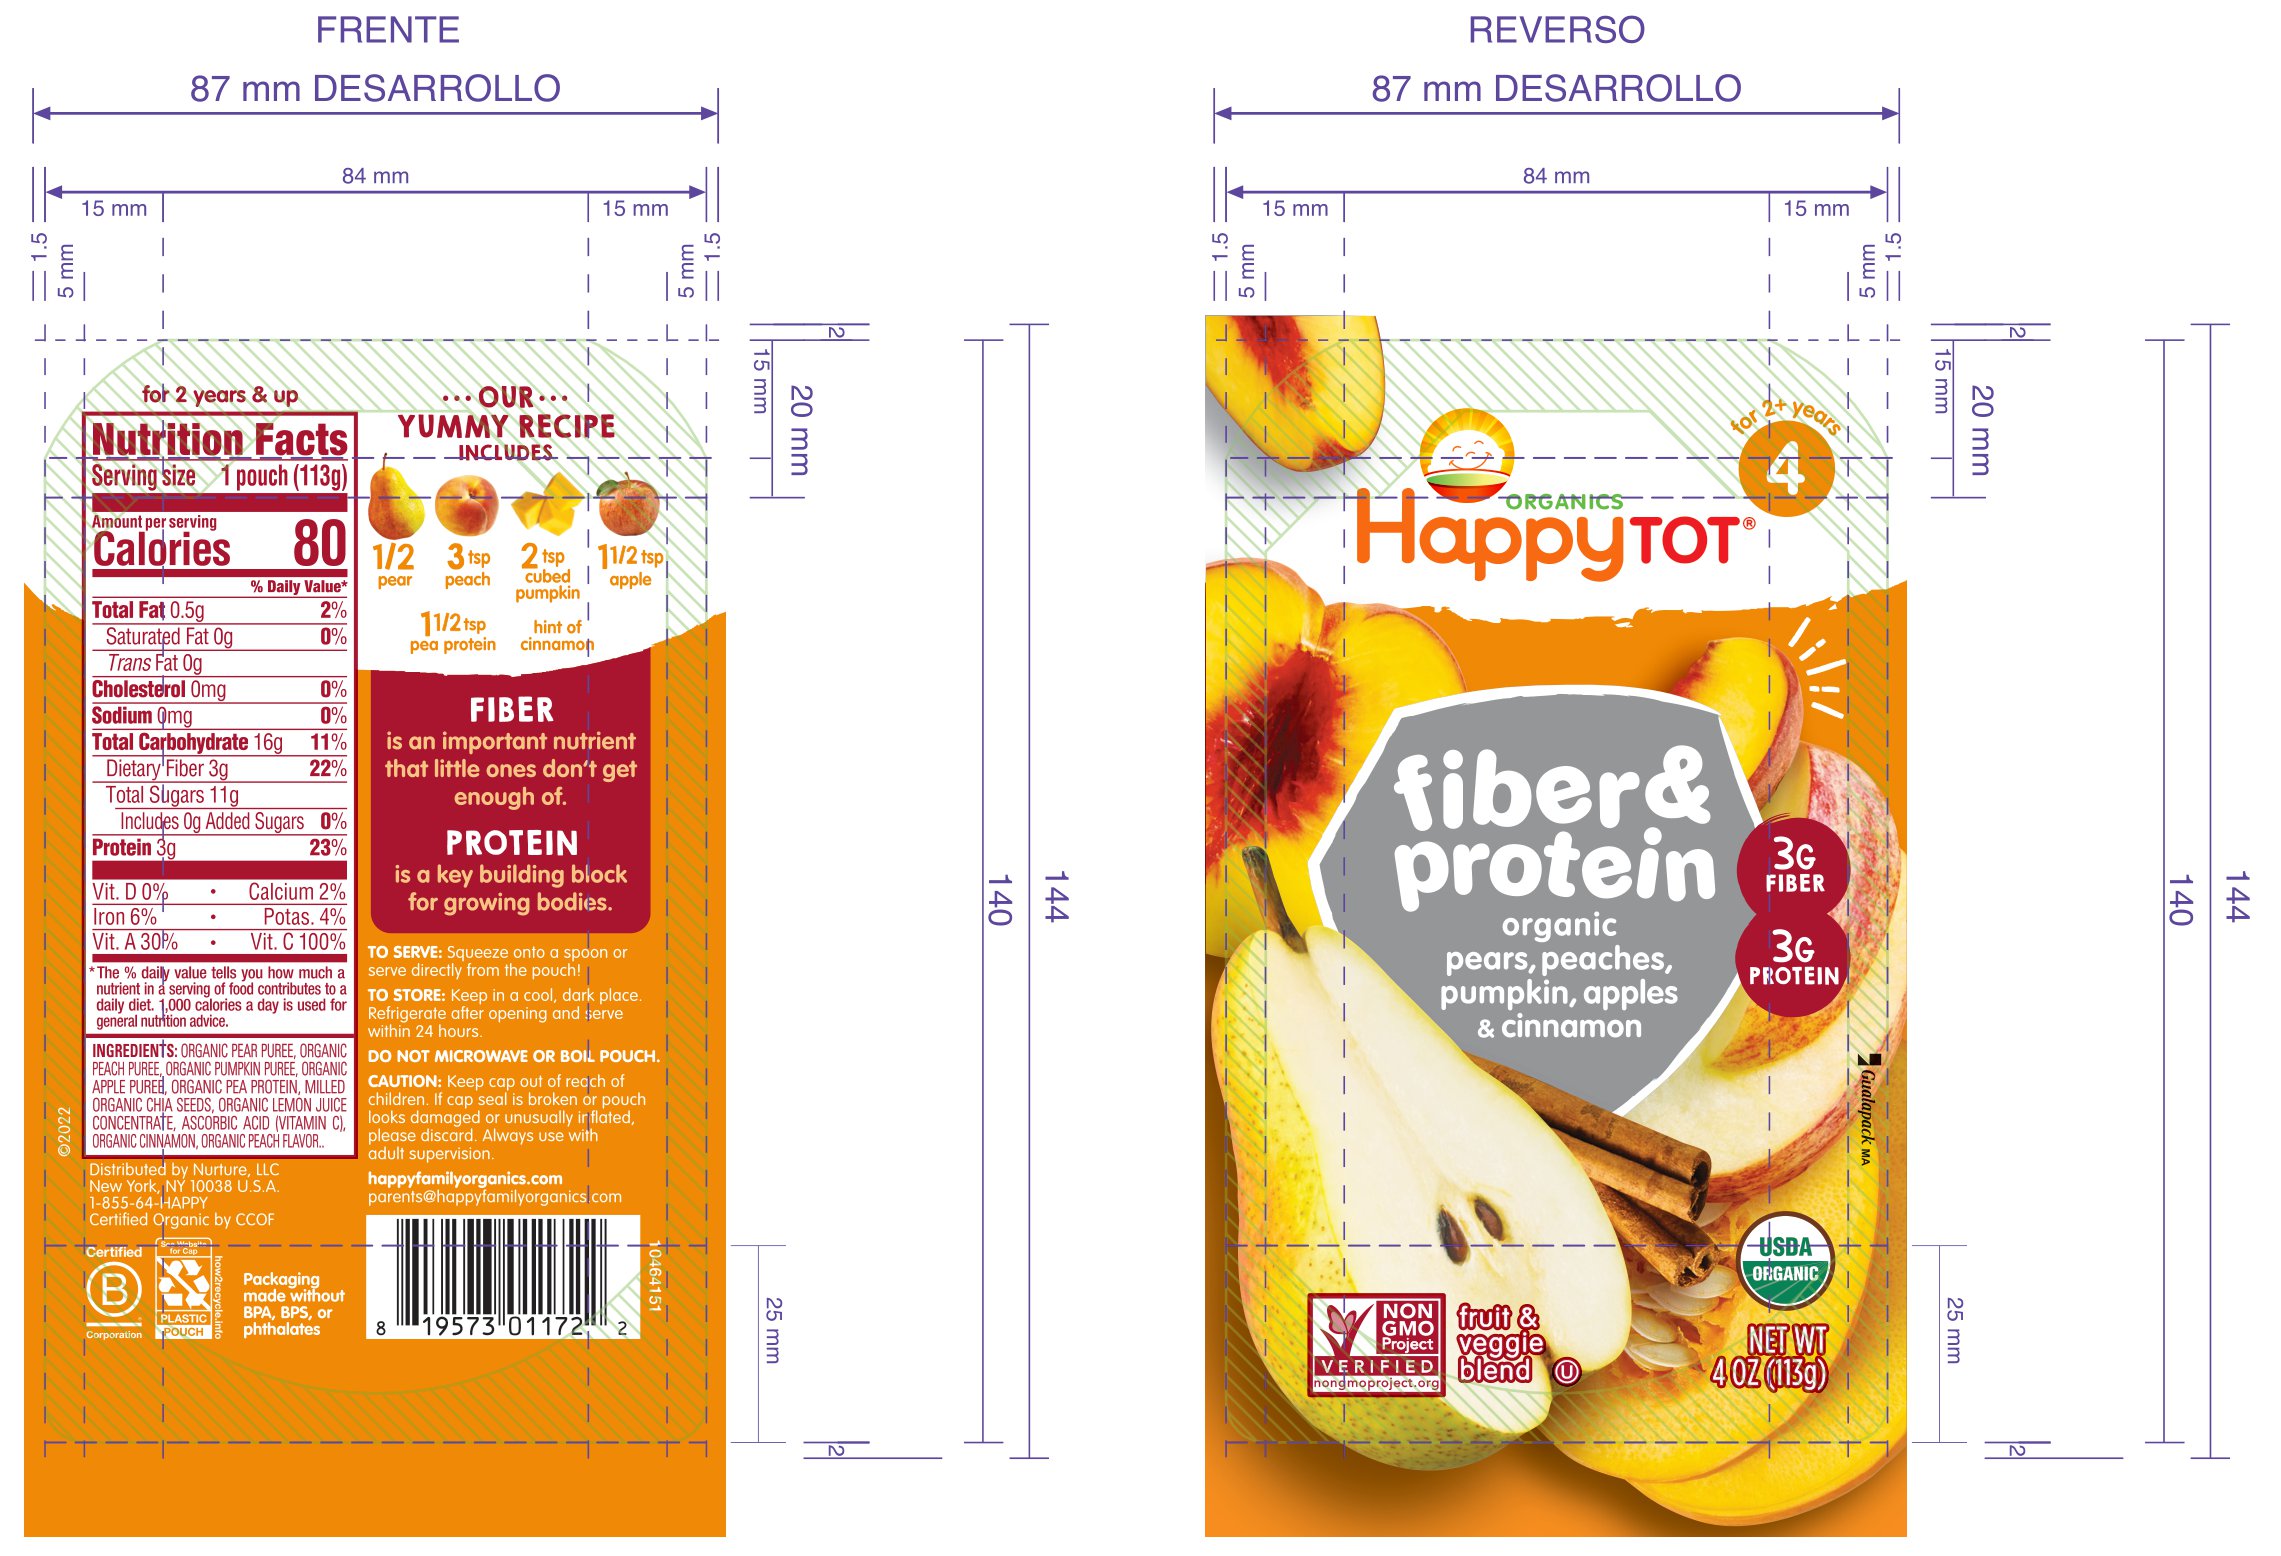 Happy Tot S4 - Fiber & Protein Organic Pears, Apples, Peaches, Pumpkin 4Oz pouch 16 units per case 4.0 oz Product Label